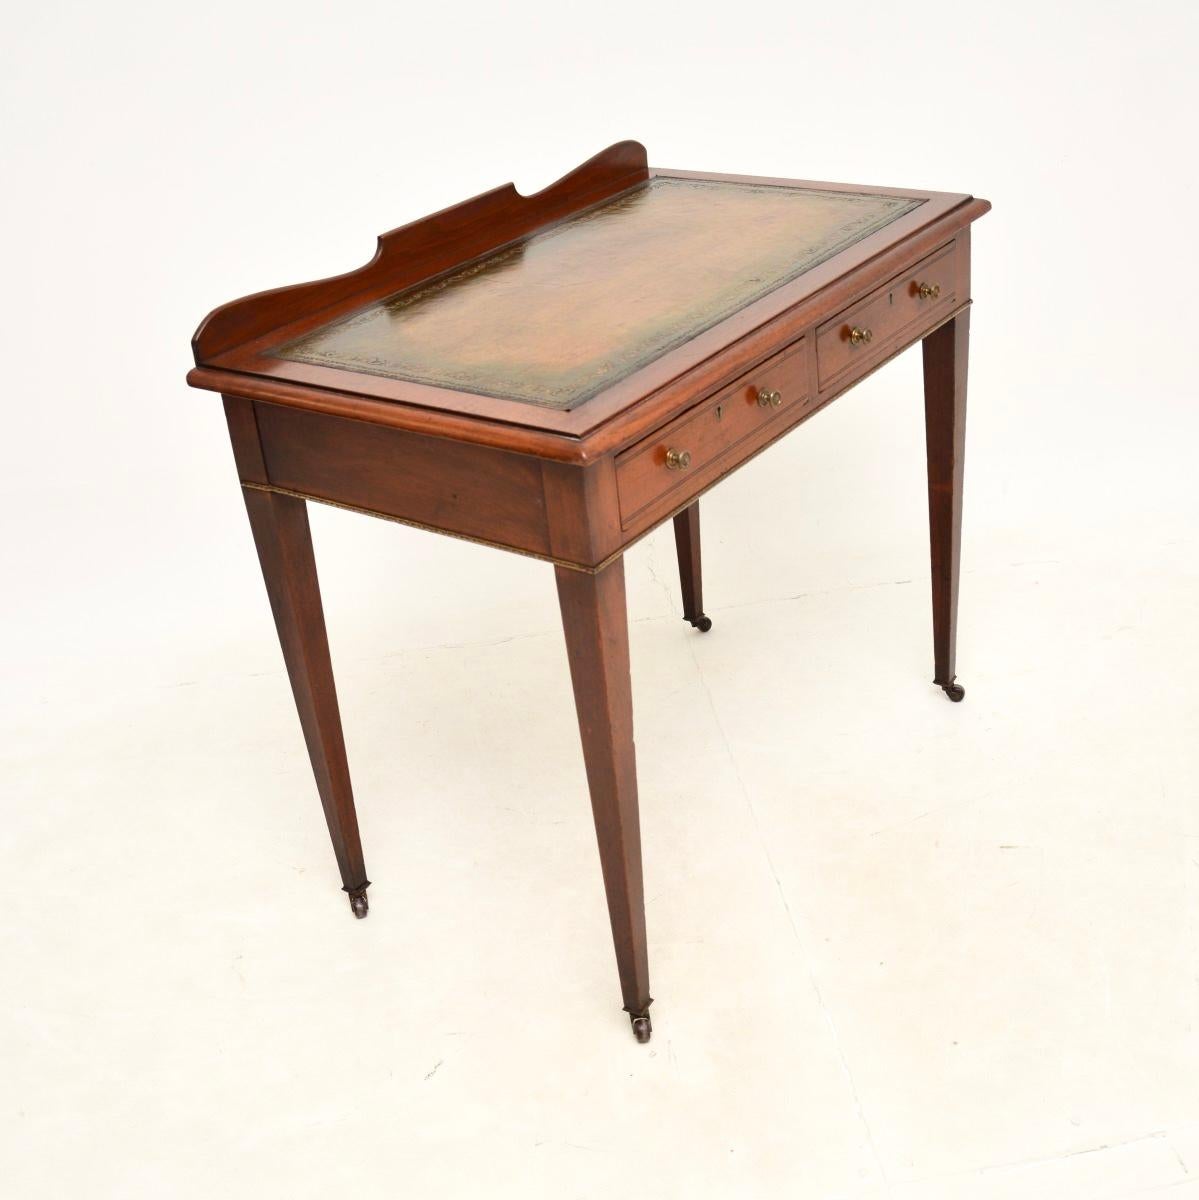 British Antique Edwardian Desk / Writing Table For Sale